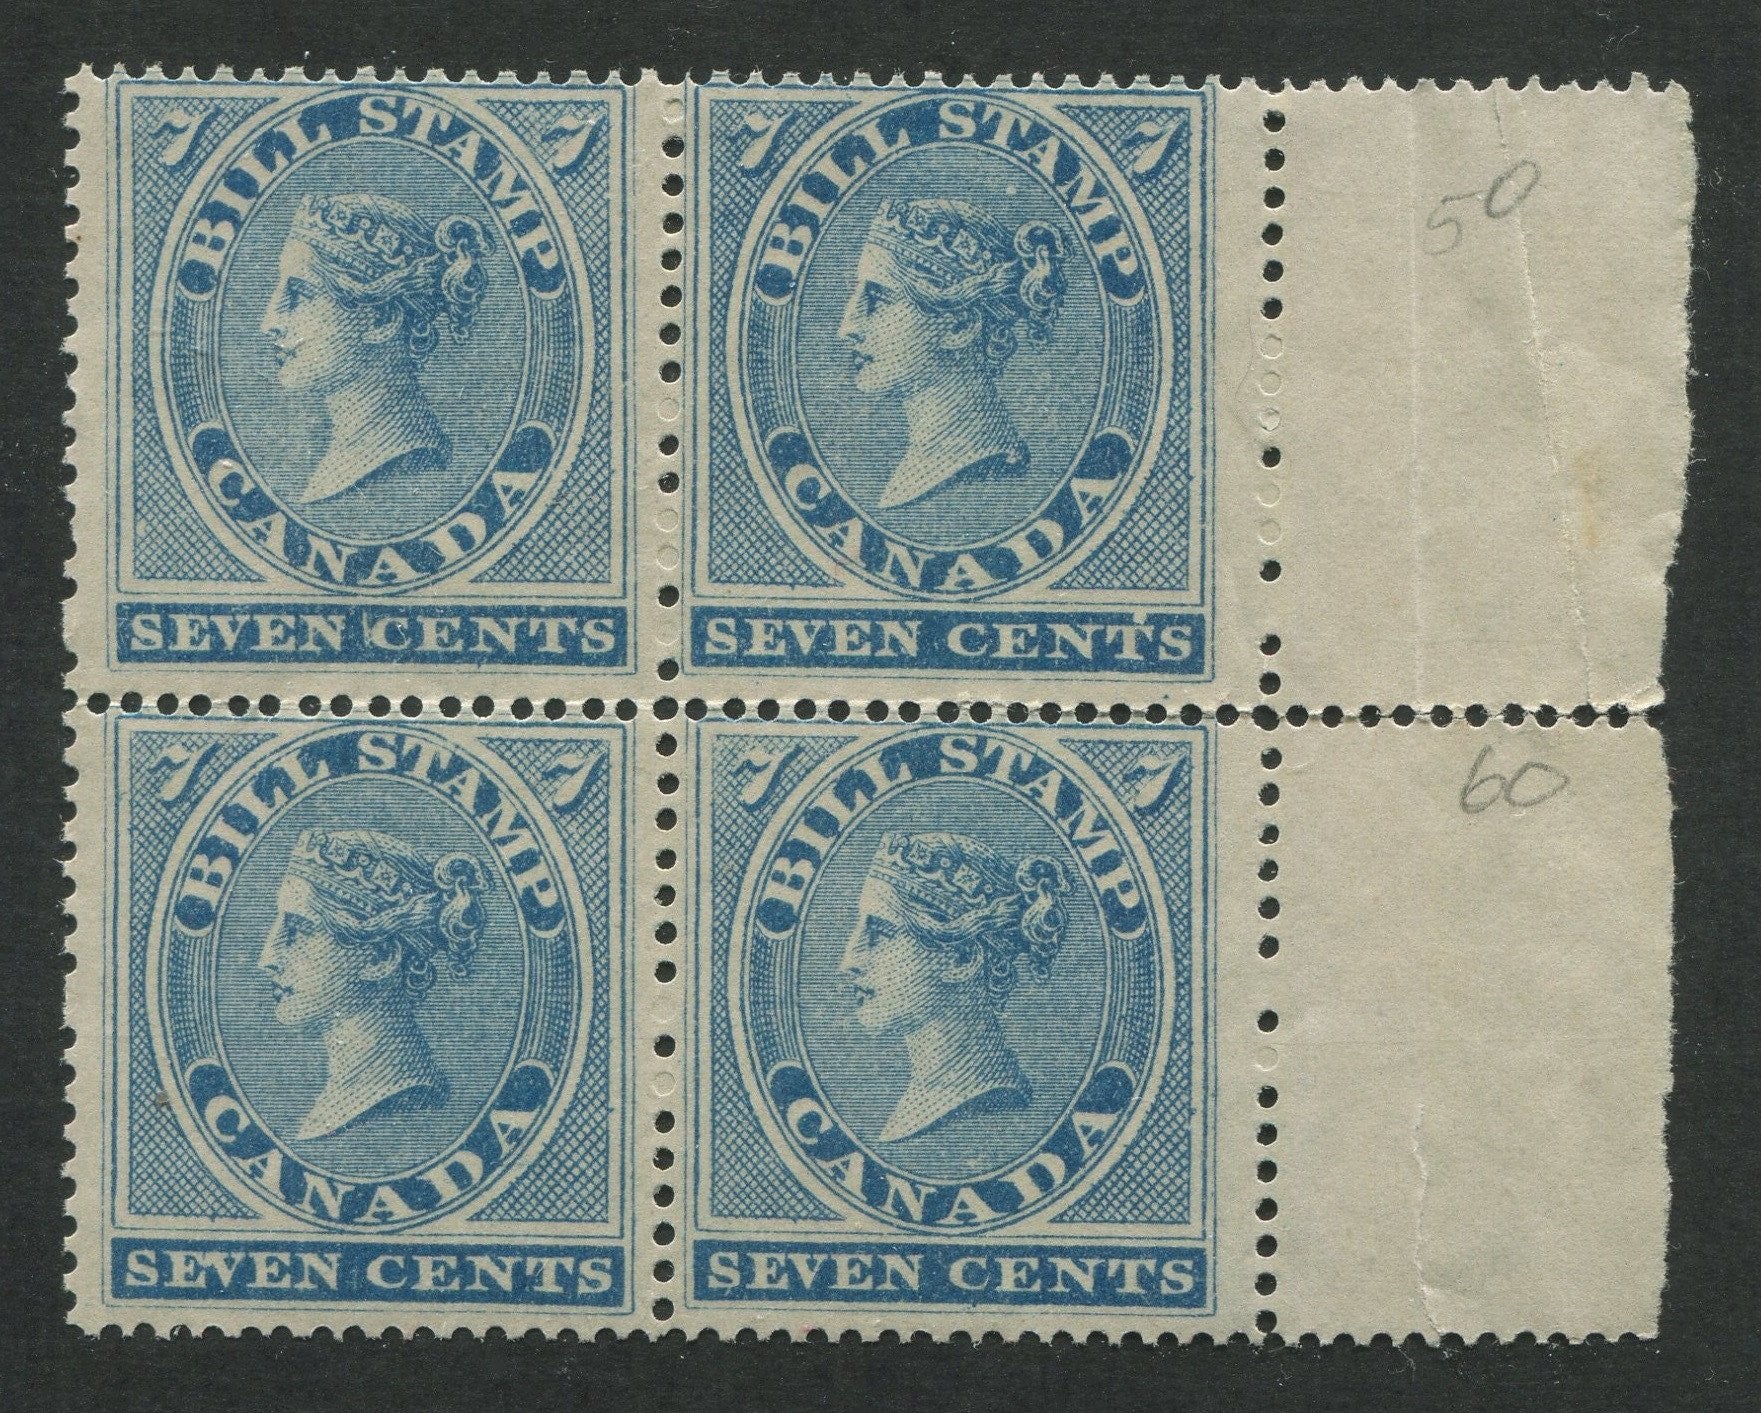 0007FB1707 - FB7 - Mint Block of 4 - Deveney Stamps Ltd. Canadian Stamps